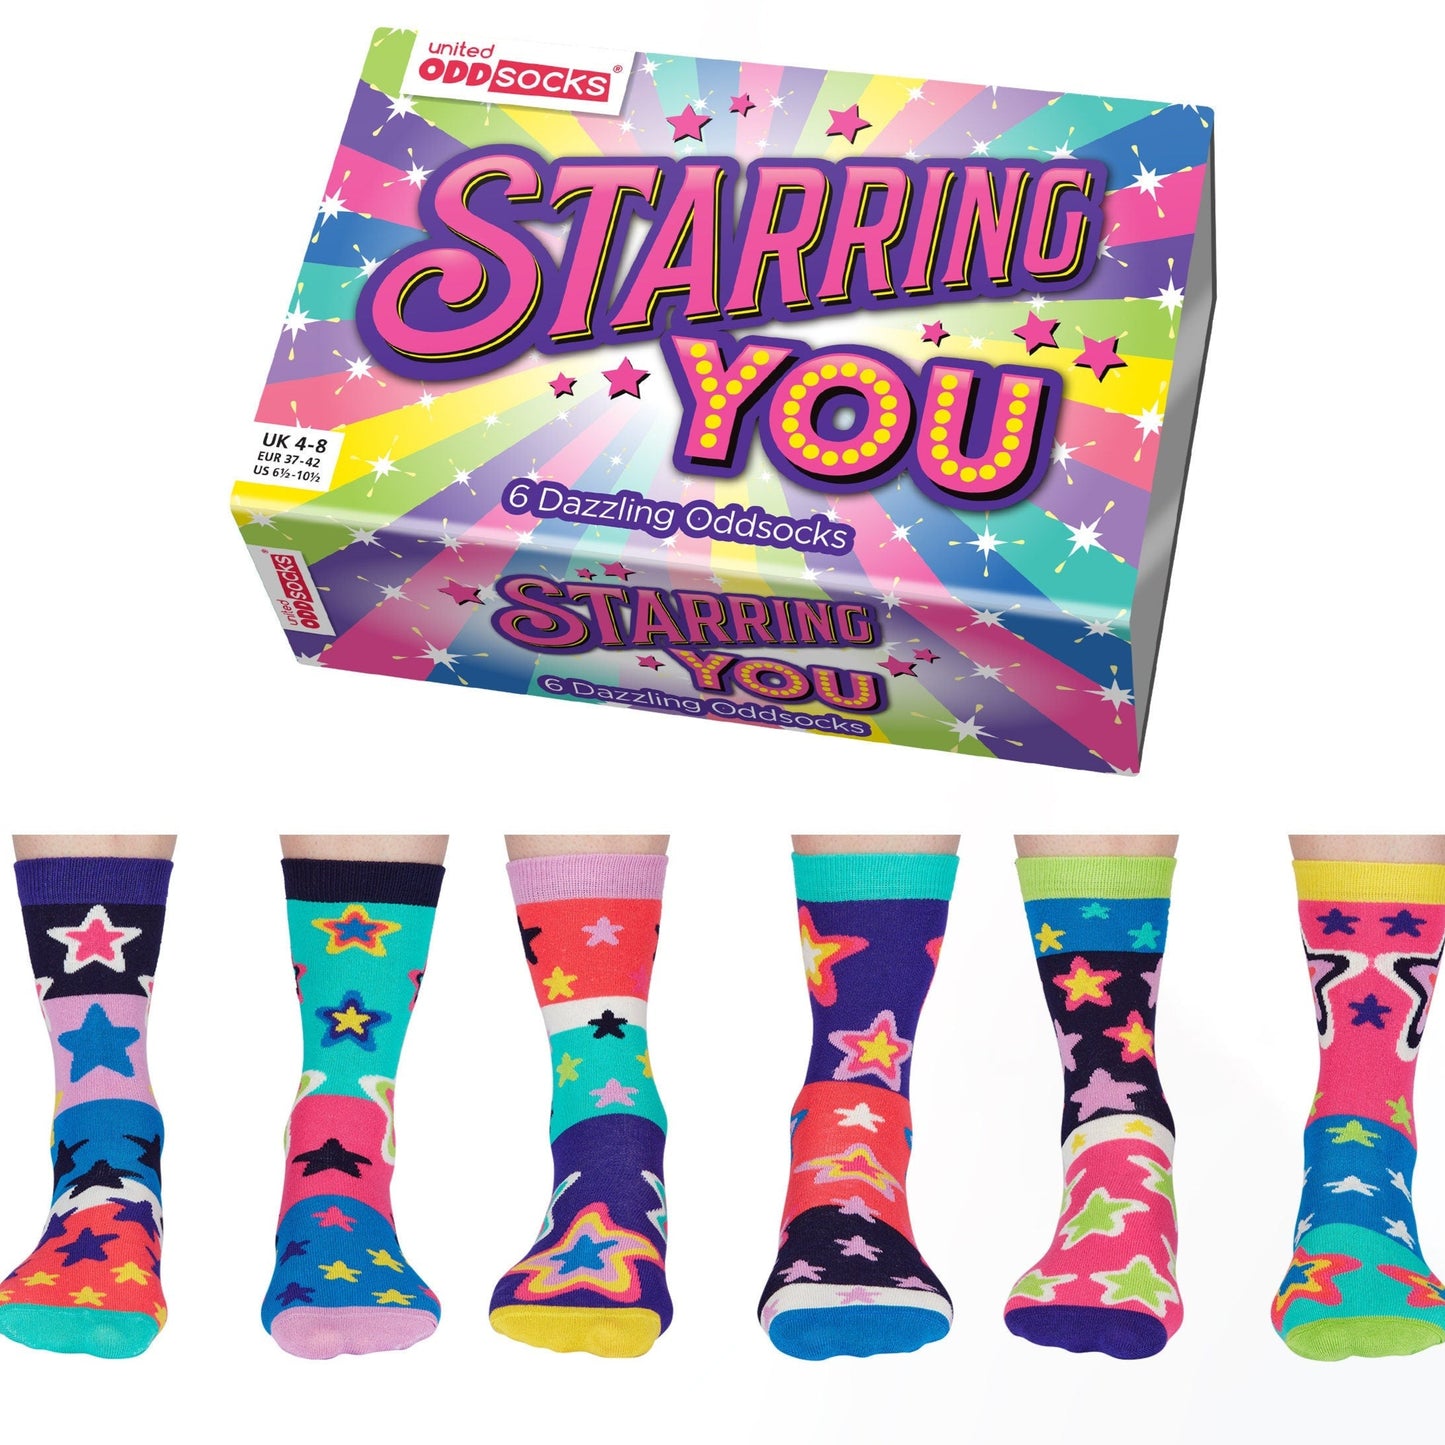 United Oddsocks STARRING YOU 6 Odd Socks Gift Box-Ladies Size 4-8